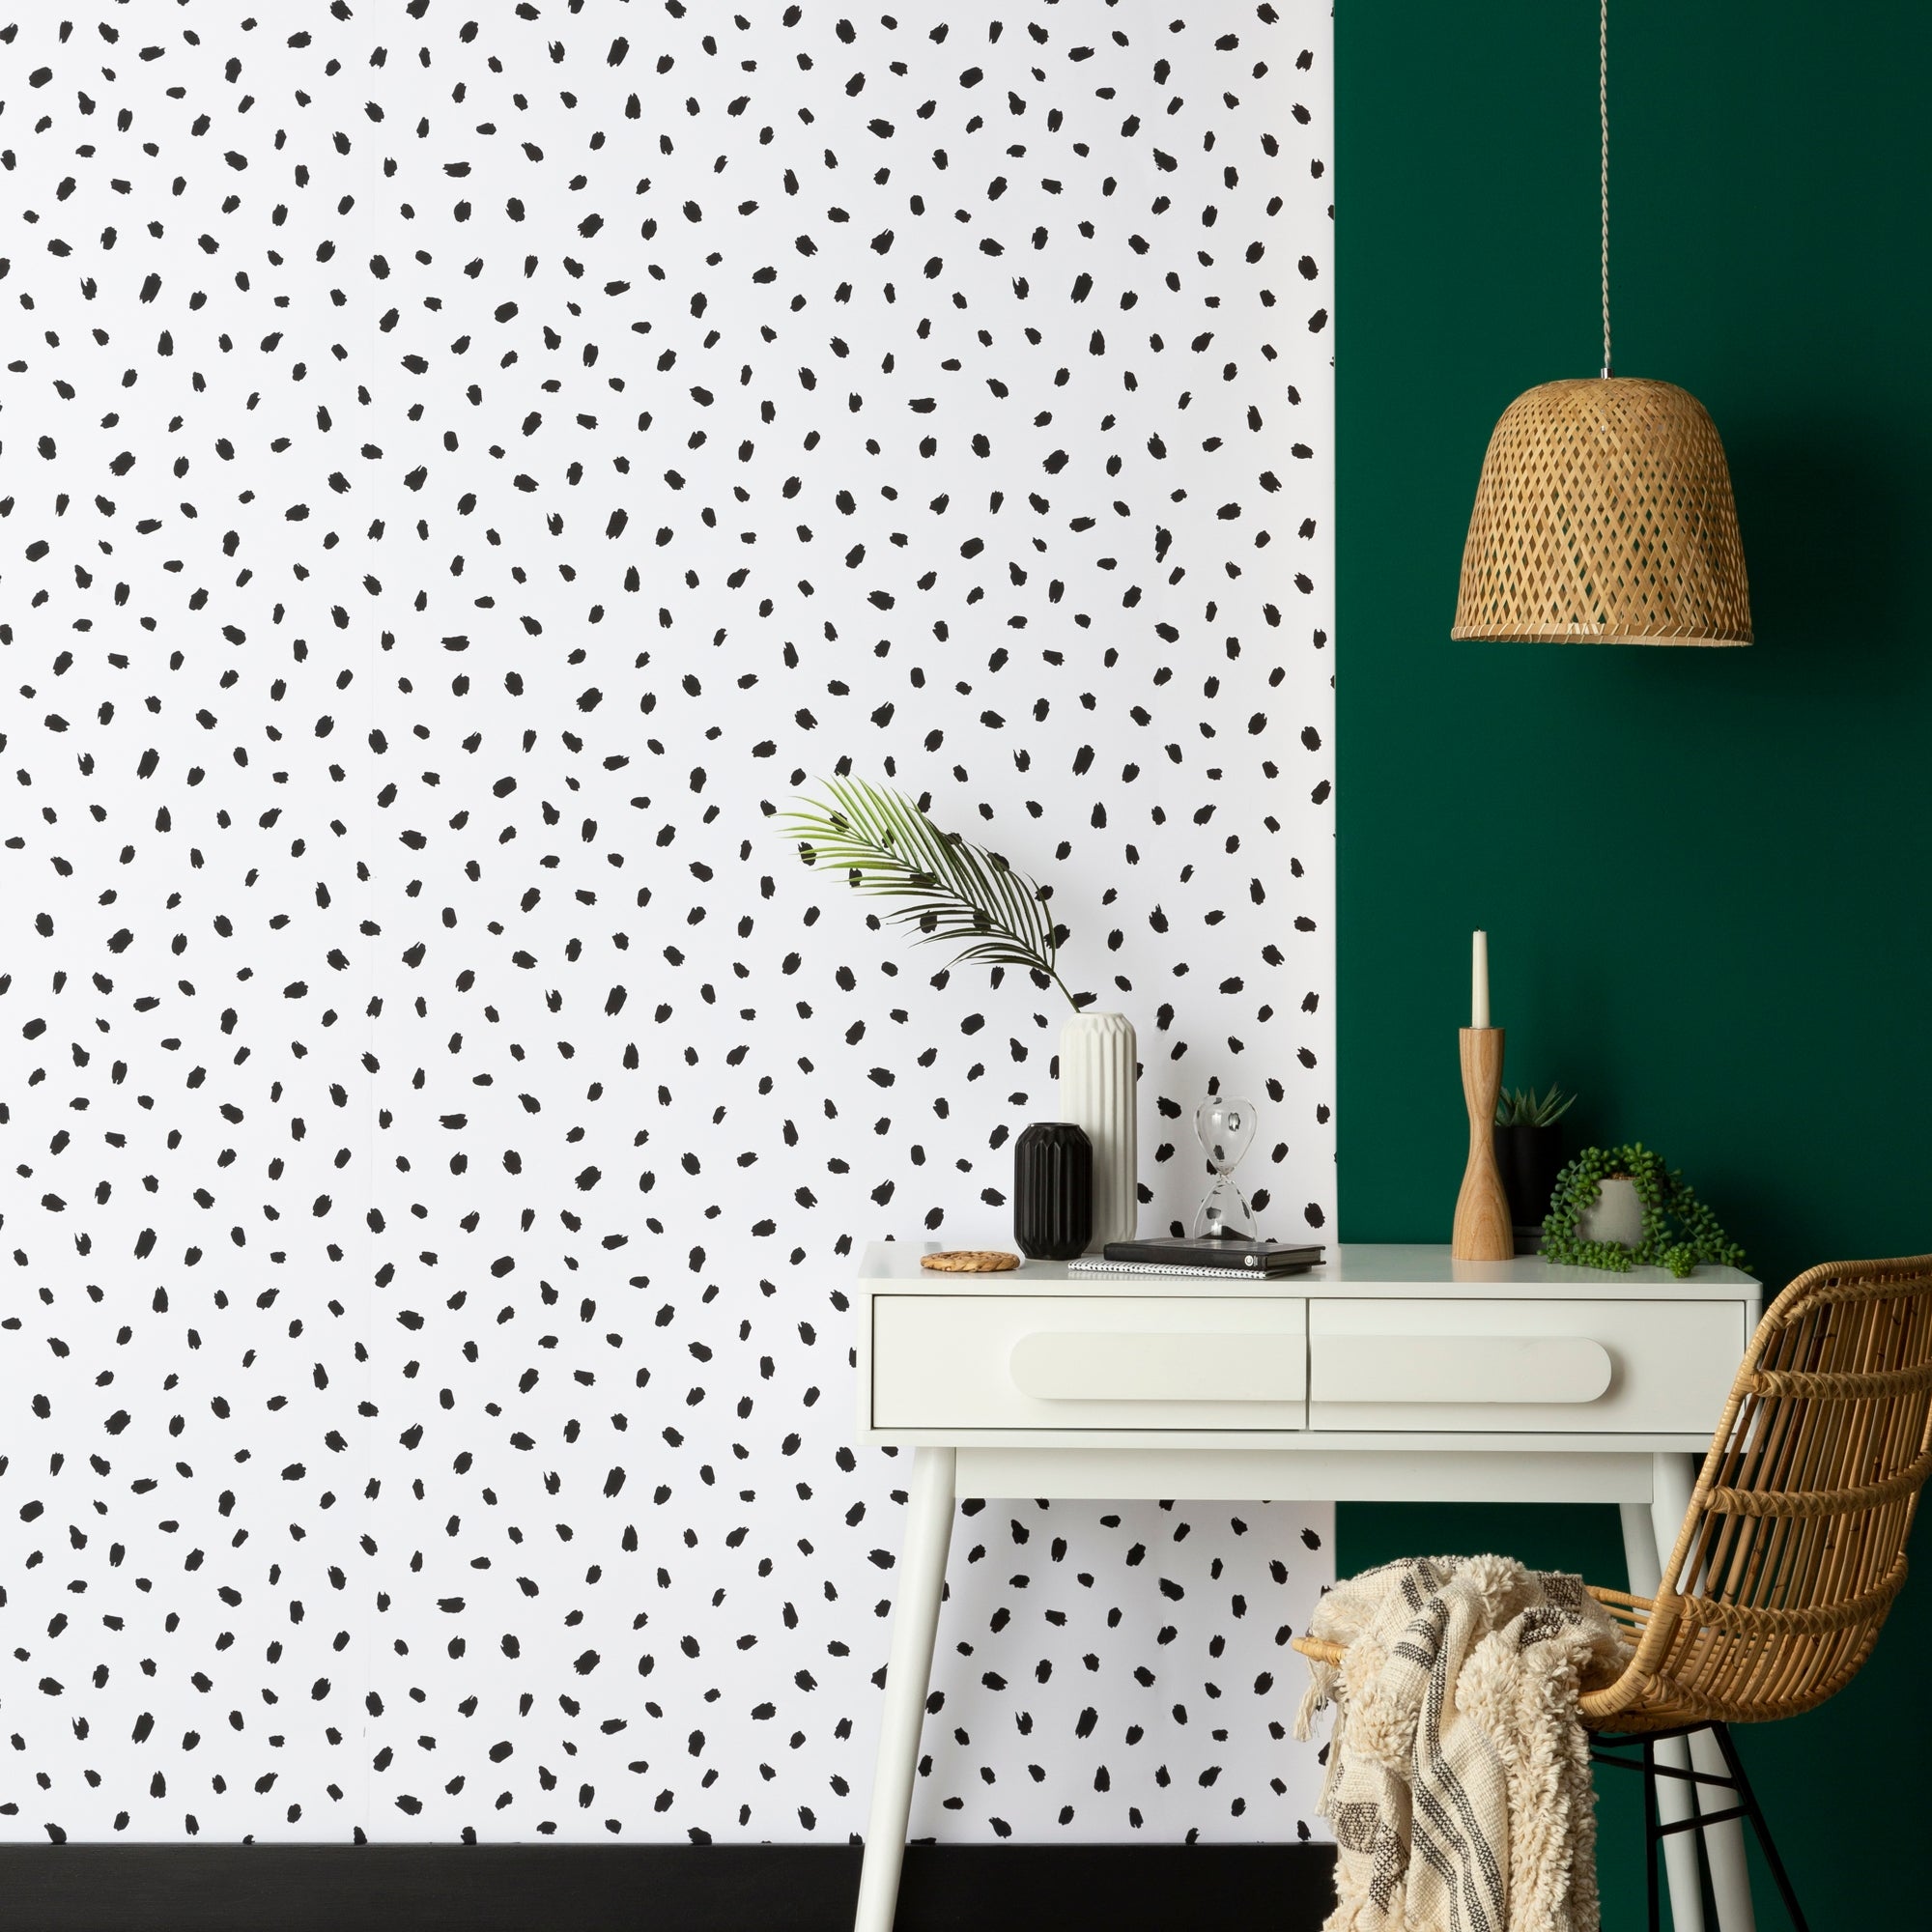 Speckles wallpaper in monochrome